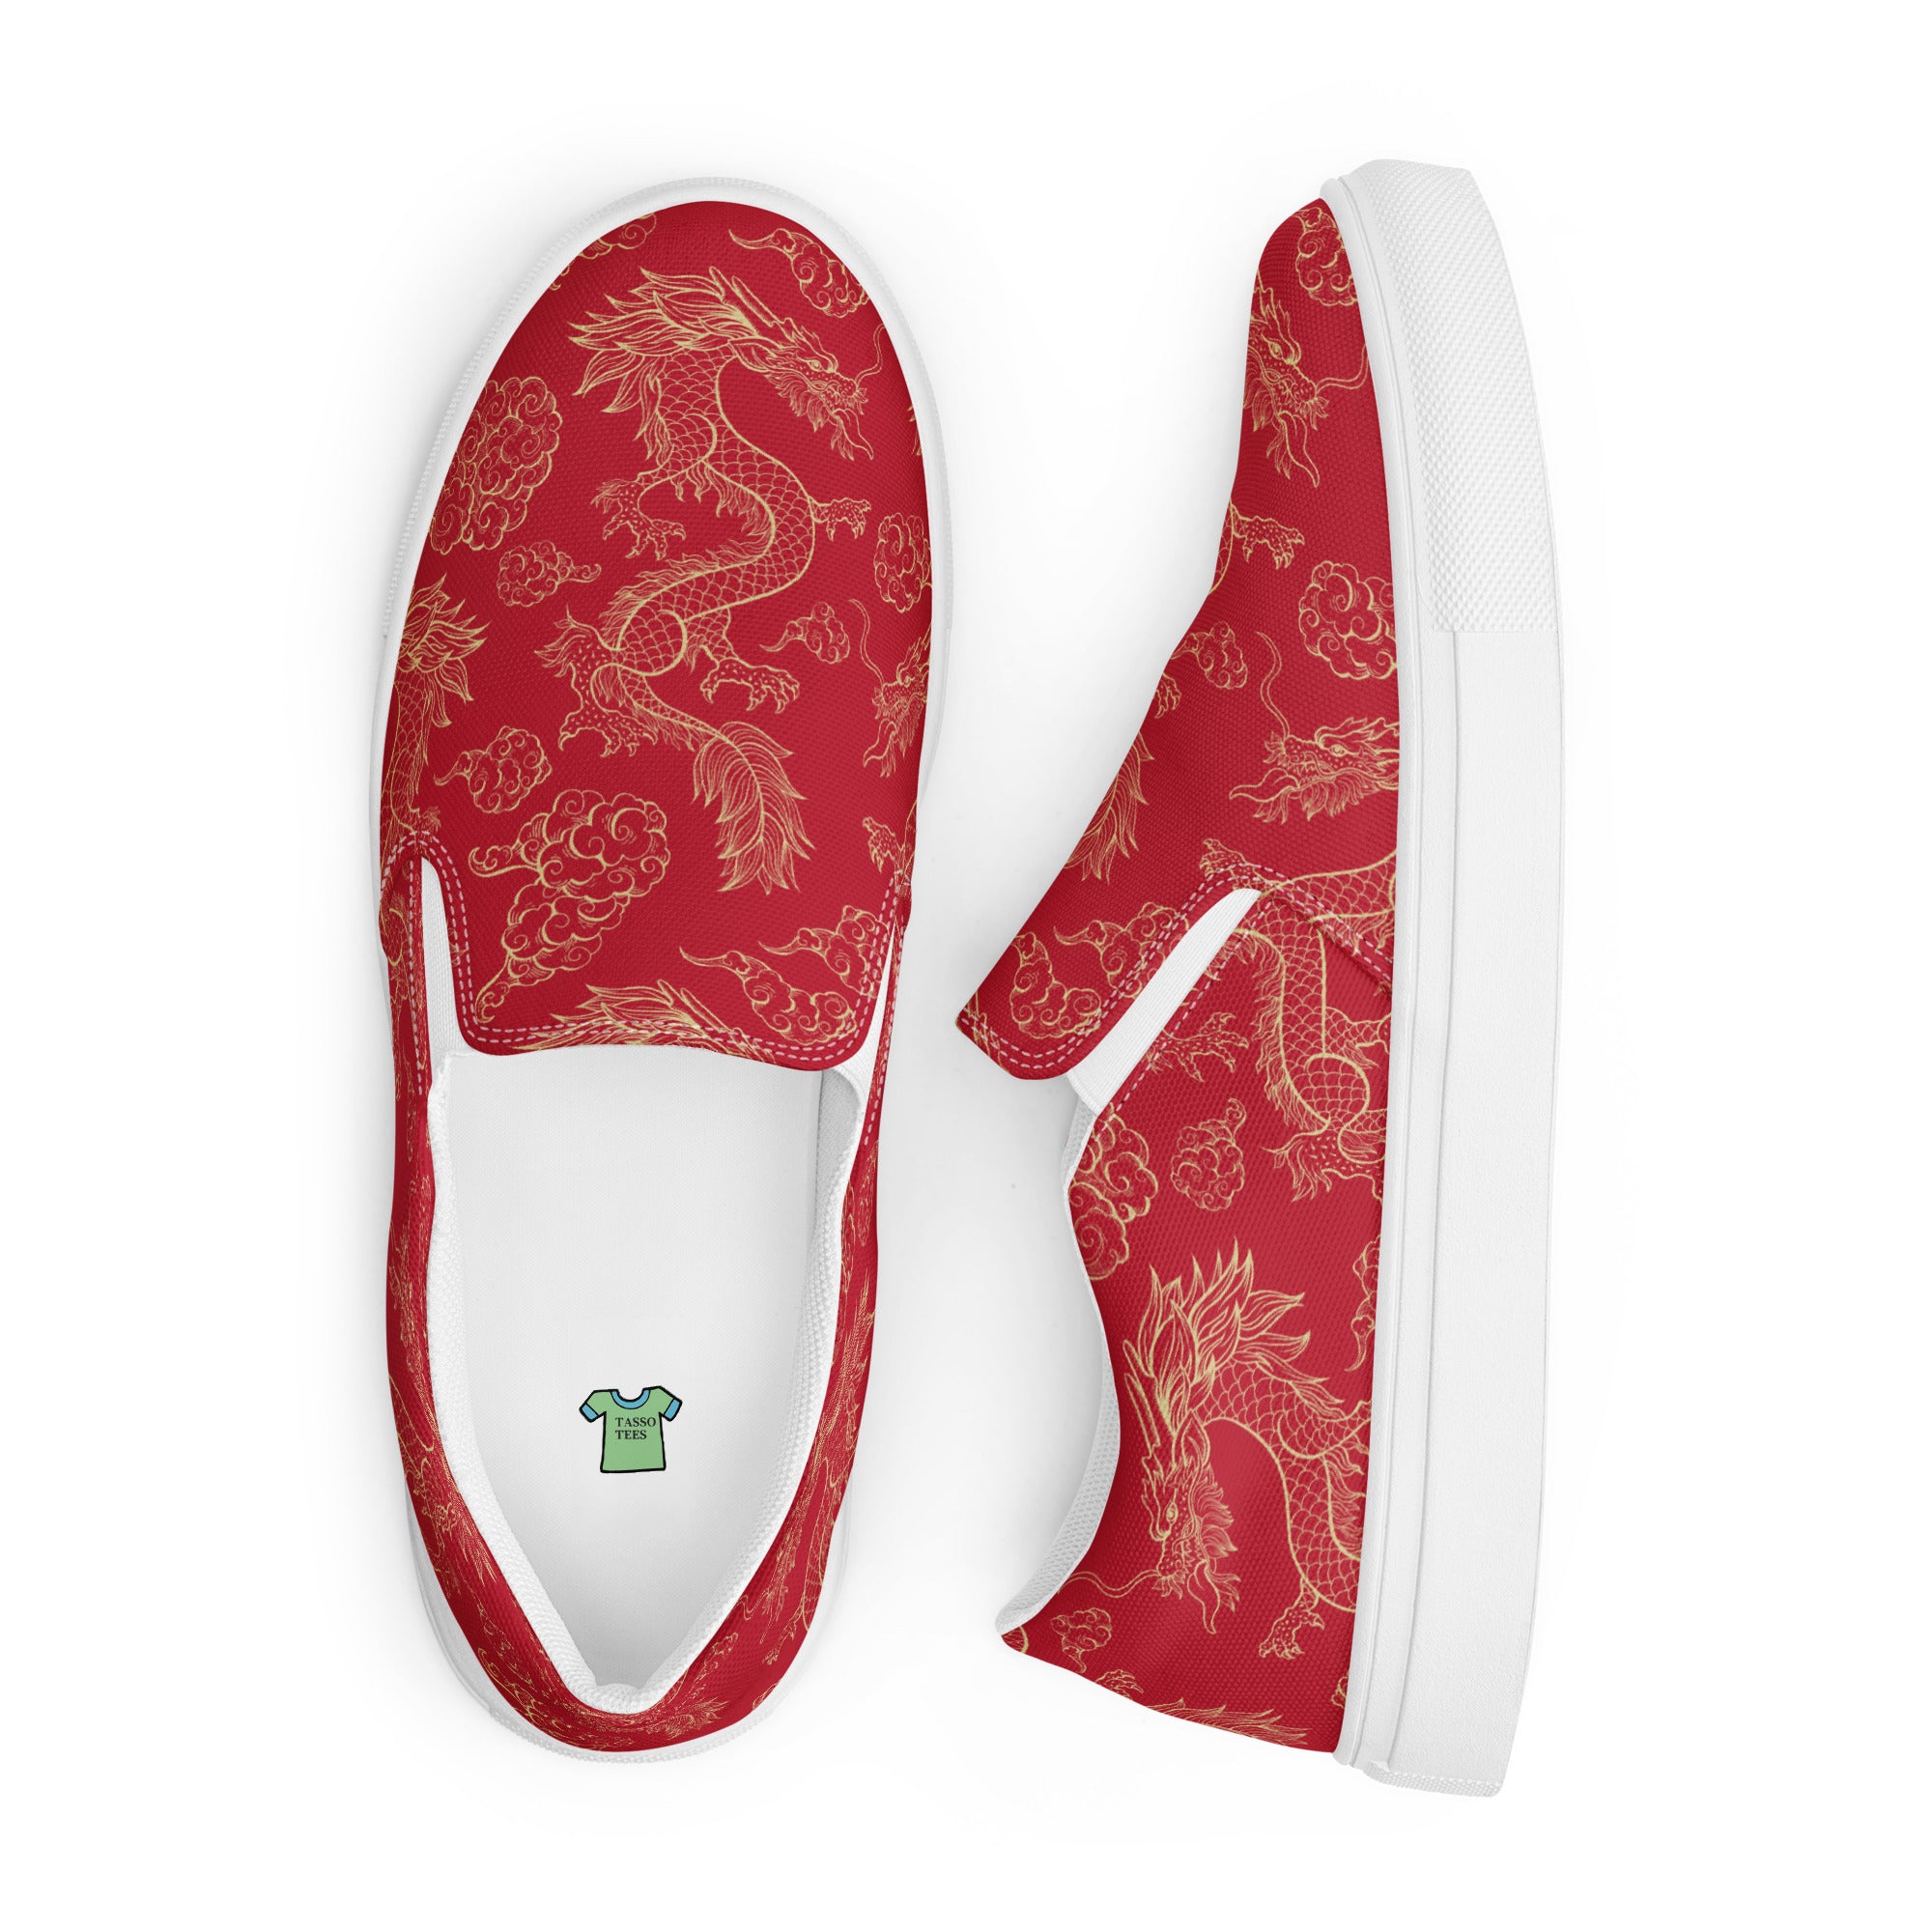 Womens Red Canvas Slip On Shoes Sale | bellvalefarms.com